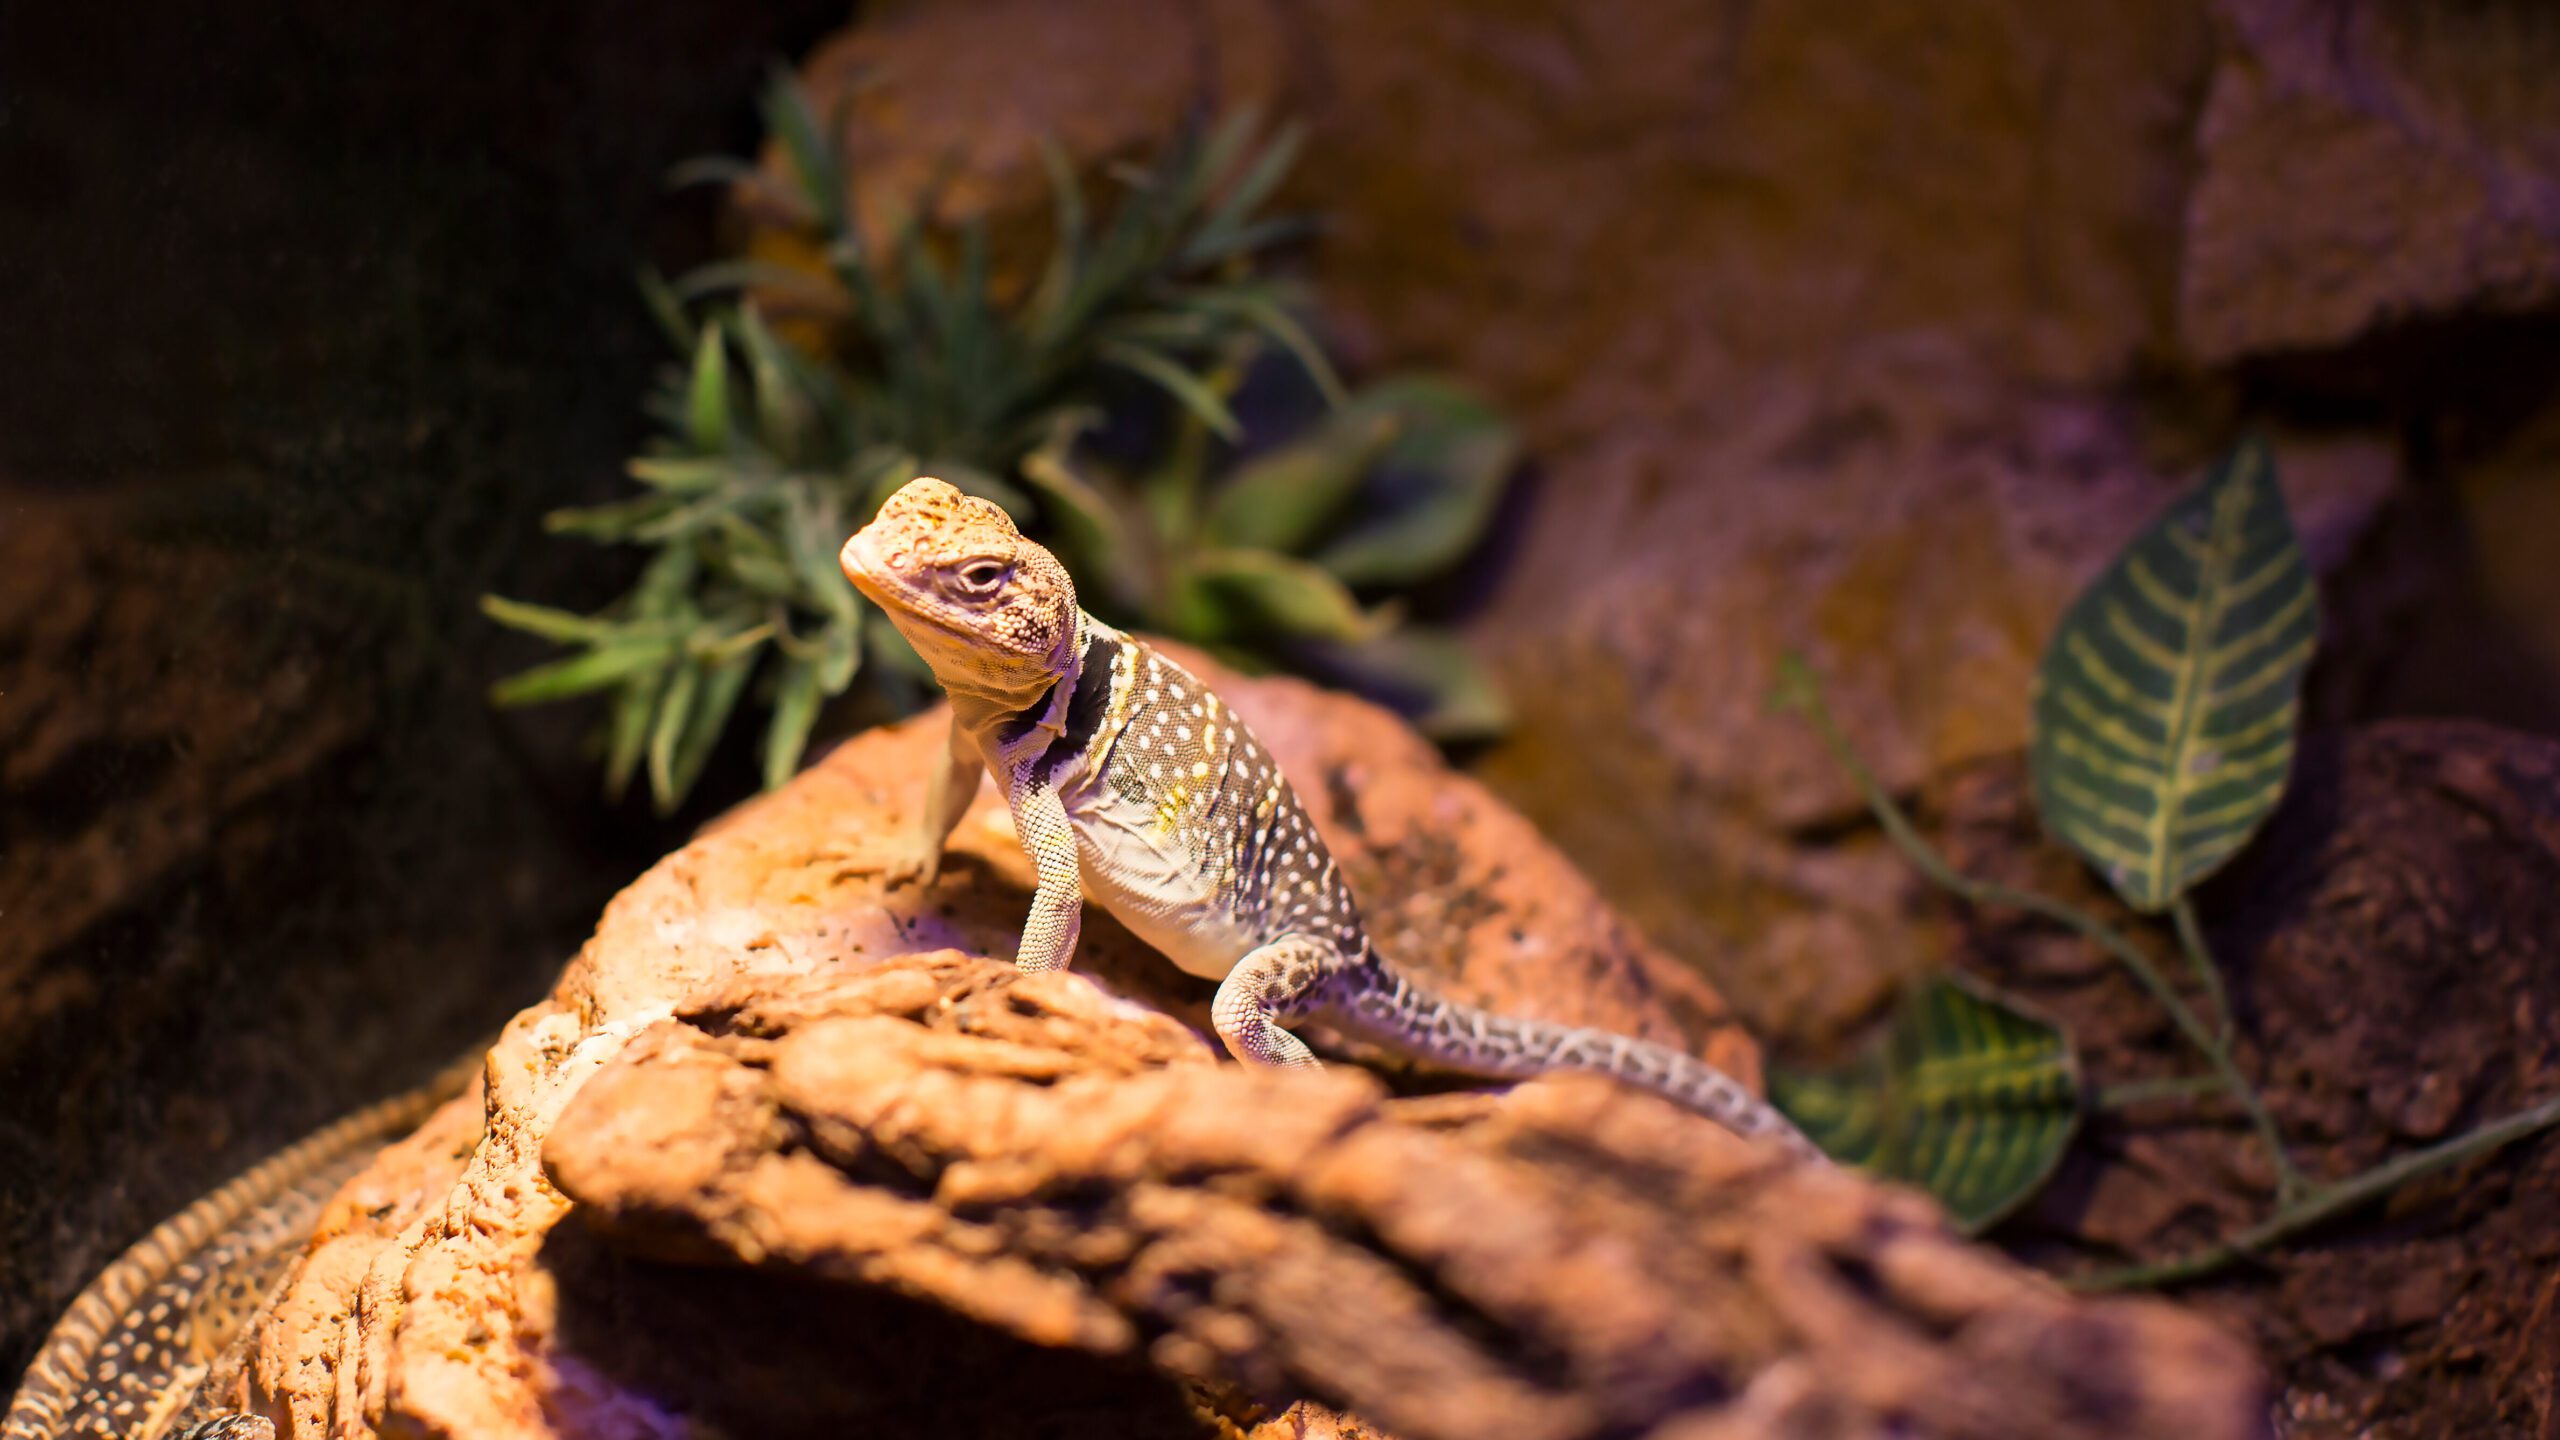 Pet lizard basking in its enclosure under a heat lamp